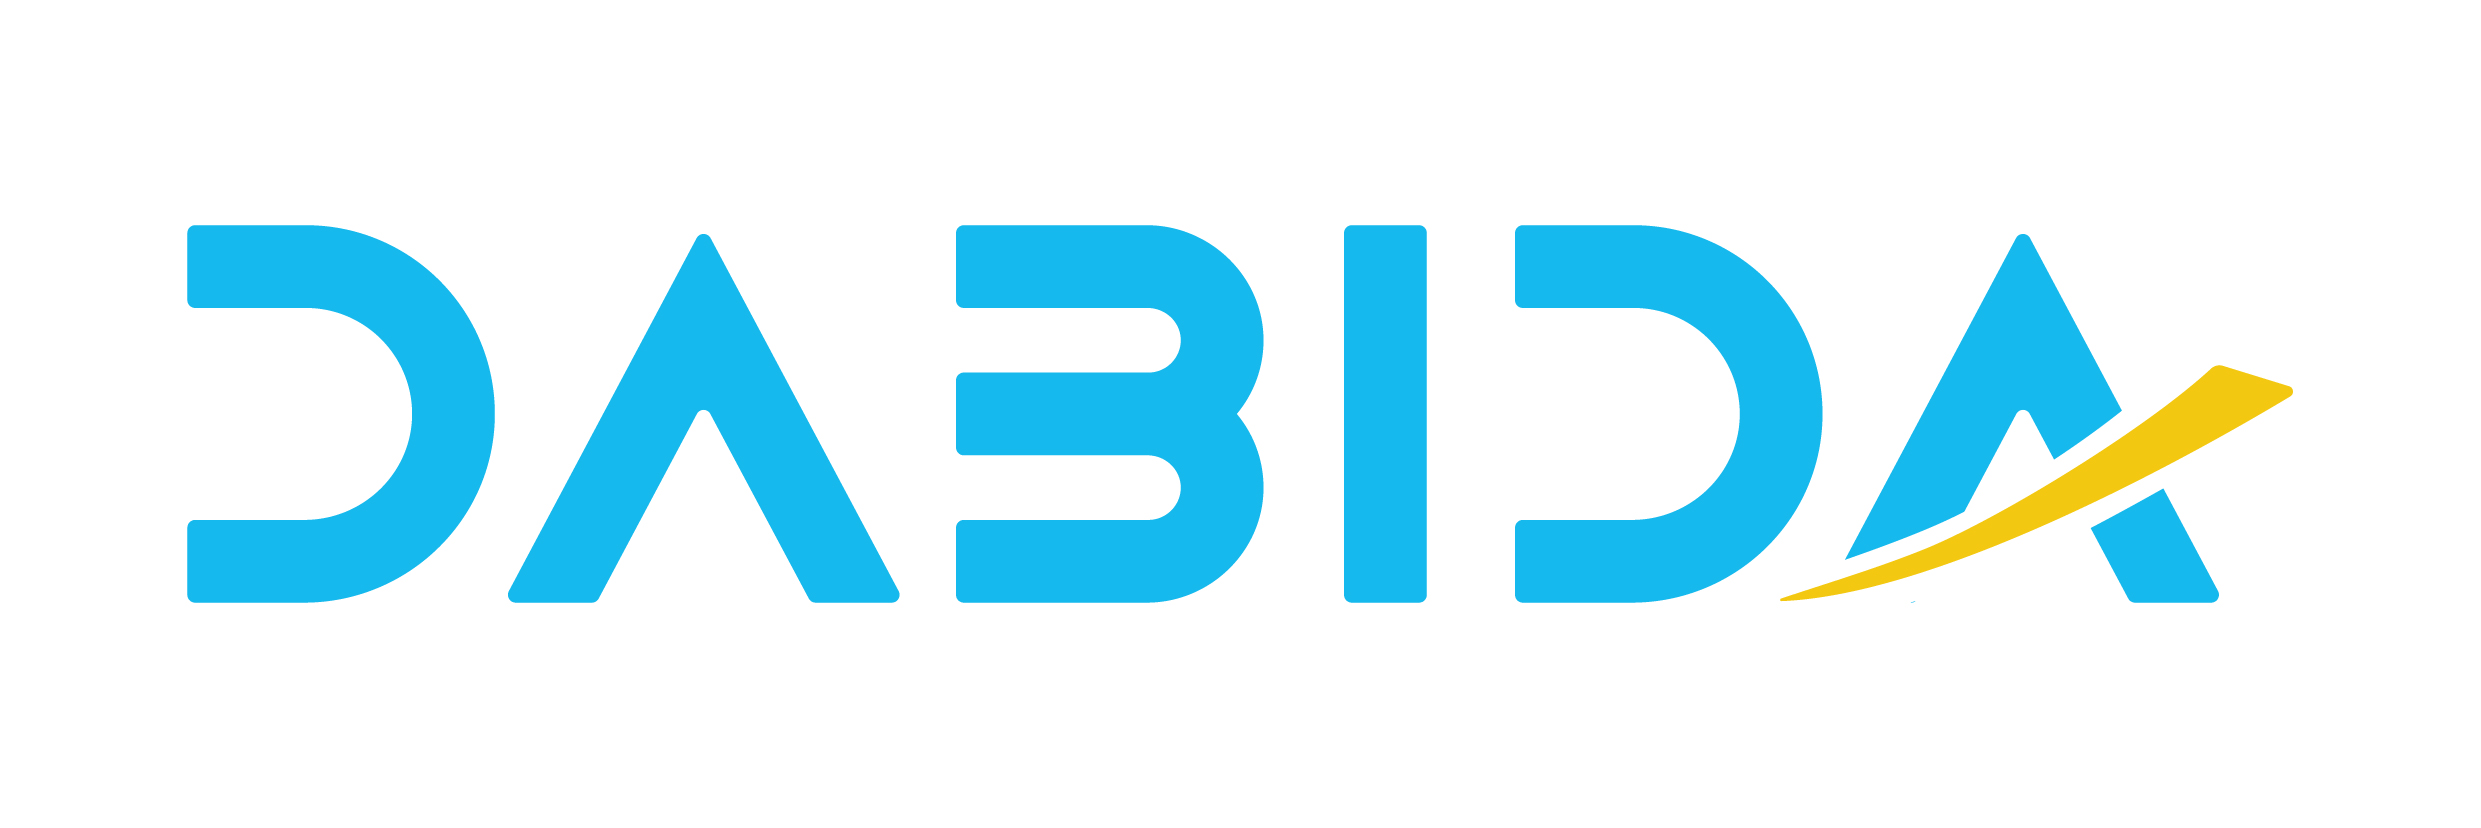 DABIDA Co., Ltd logo image